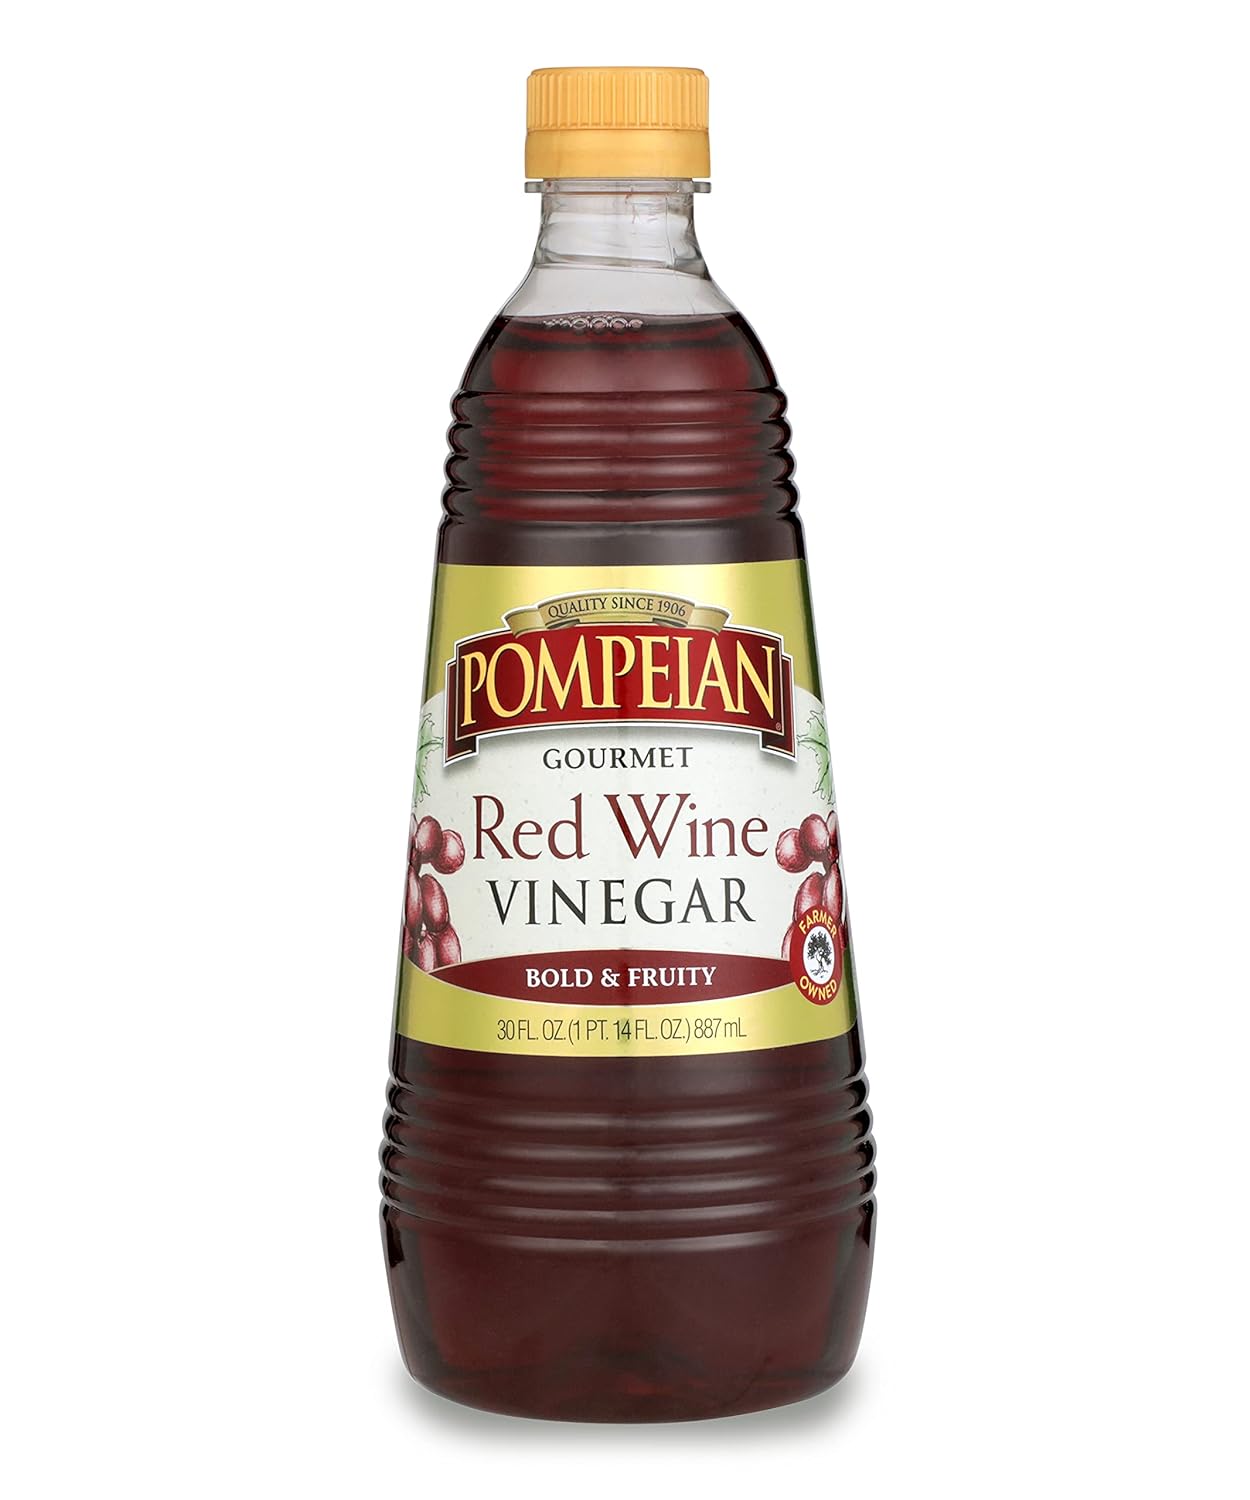 red wine vinegar